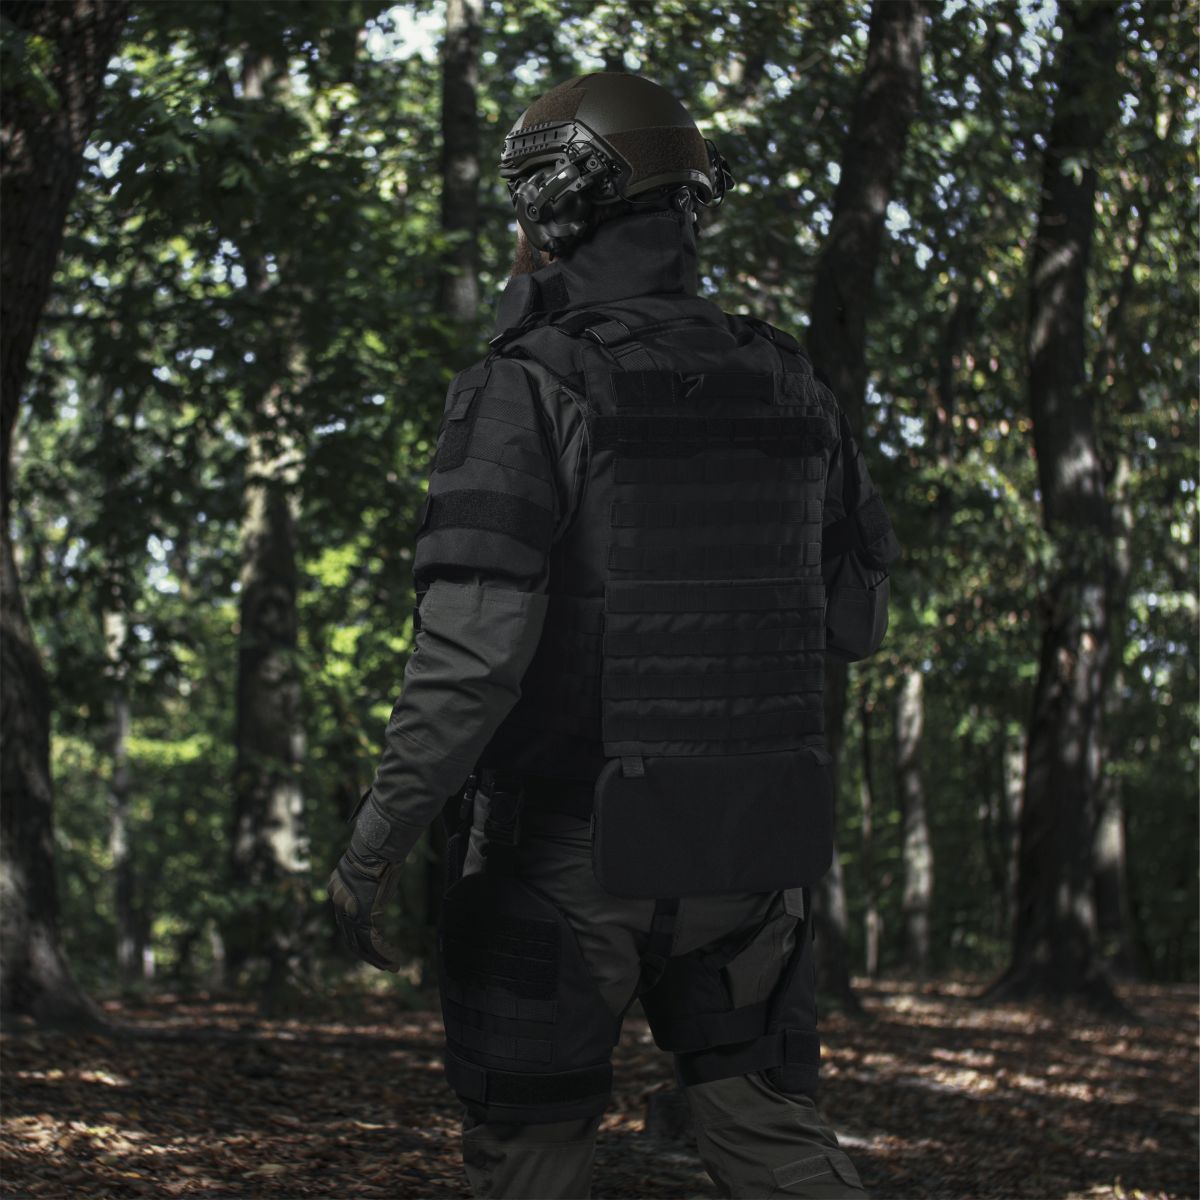 Бронекостюм A.T.A.S. (Advanced Tactical Armor Suit) Level I. Клас захисту – 1. Чорний. S/M 12